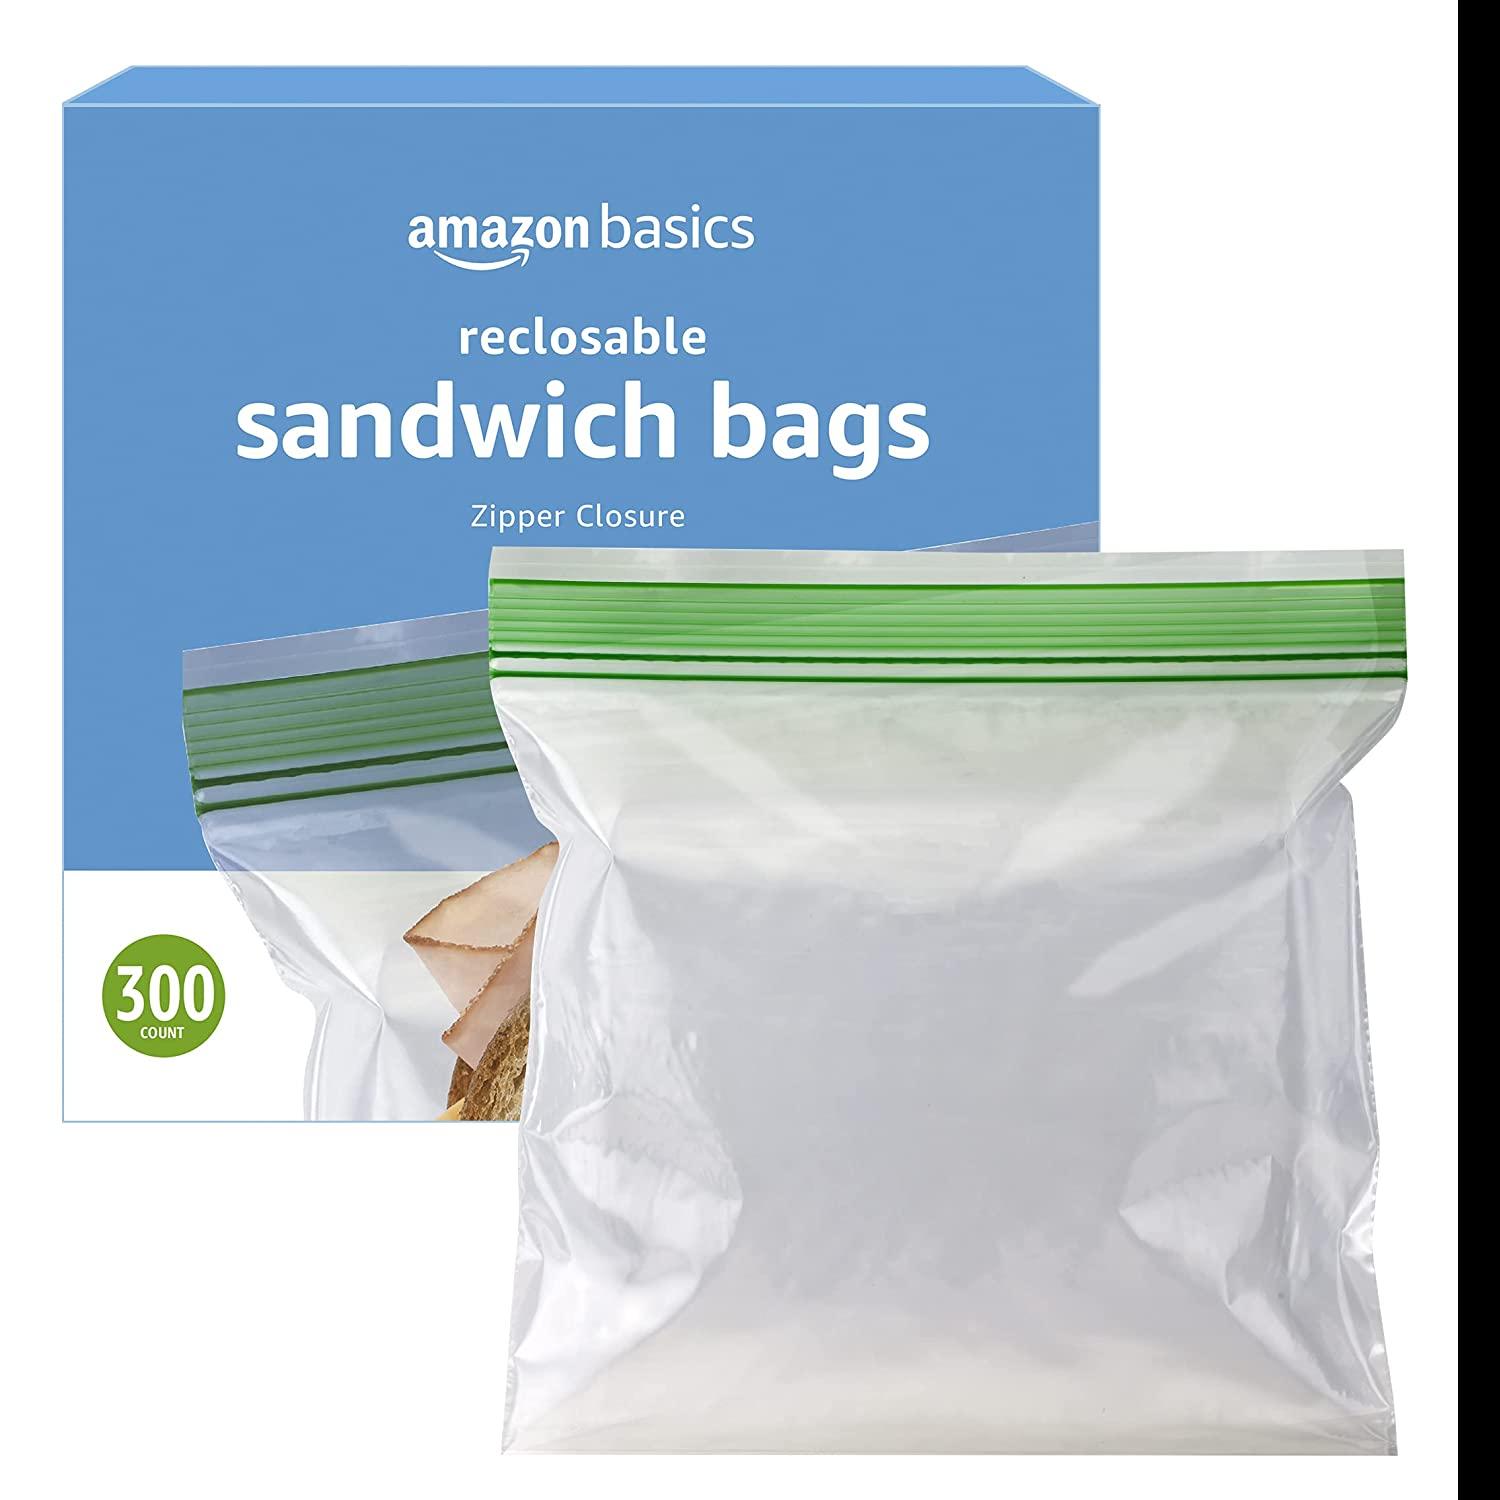 Amazon Basics Sandwich Storage Bags for $5.49 Shipped